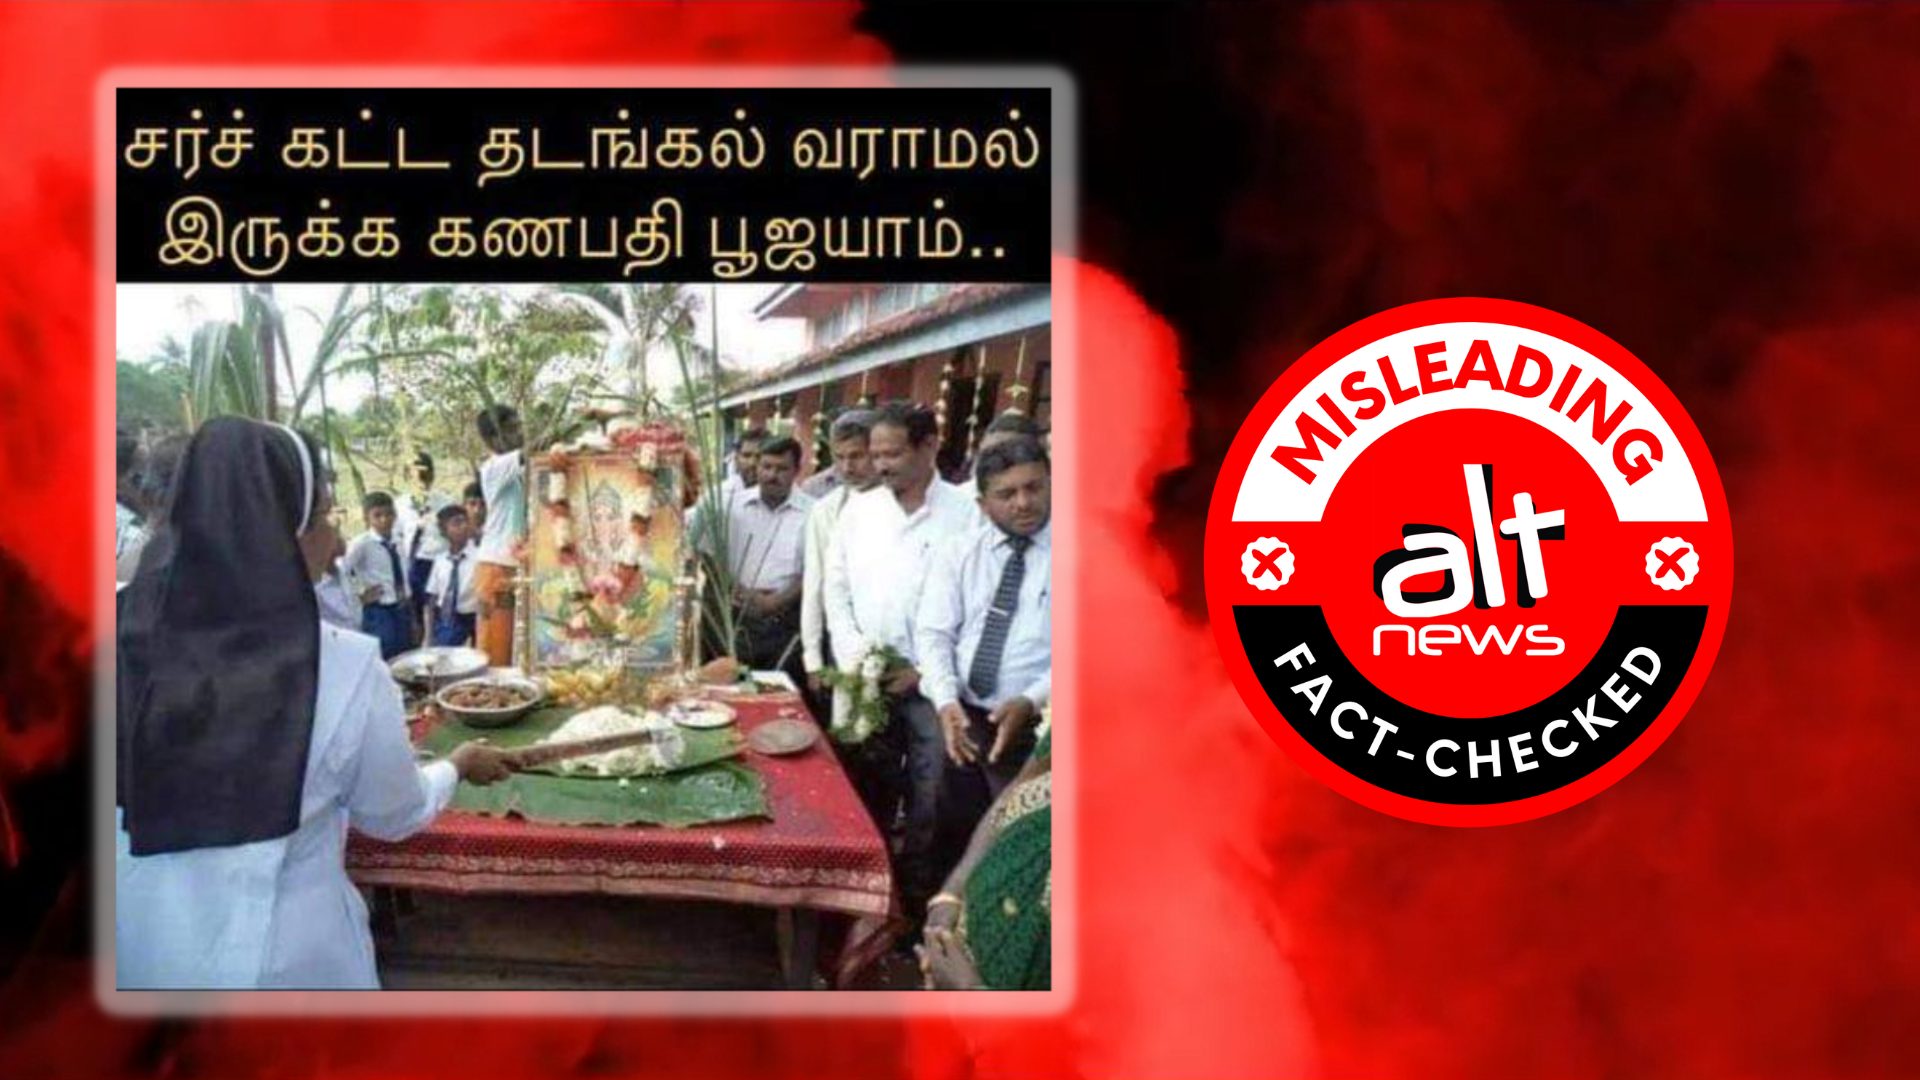 Fact-check: Christians praying to Hindu deity for peacefully building church? - Alt News